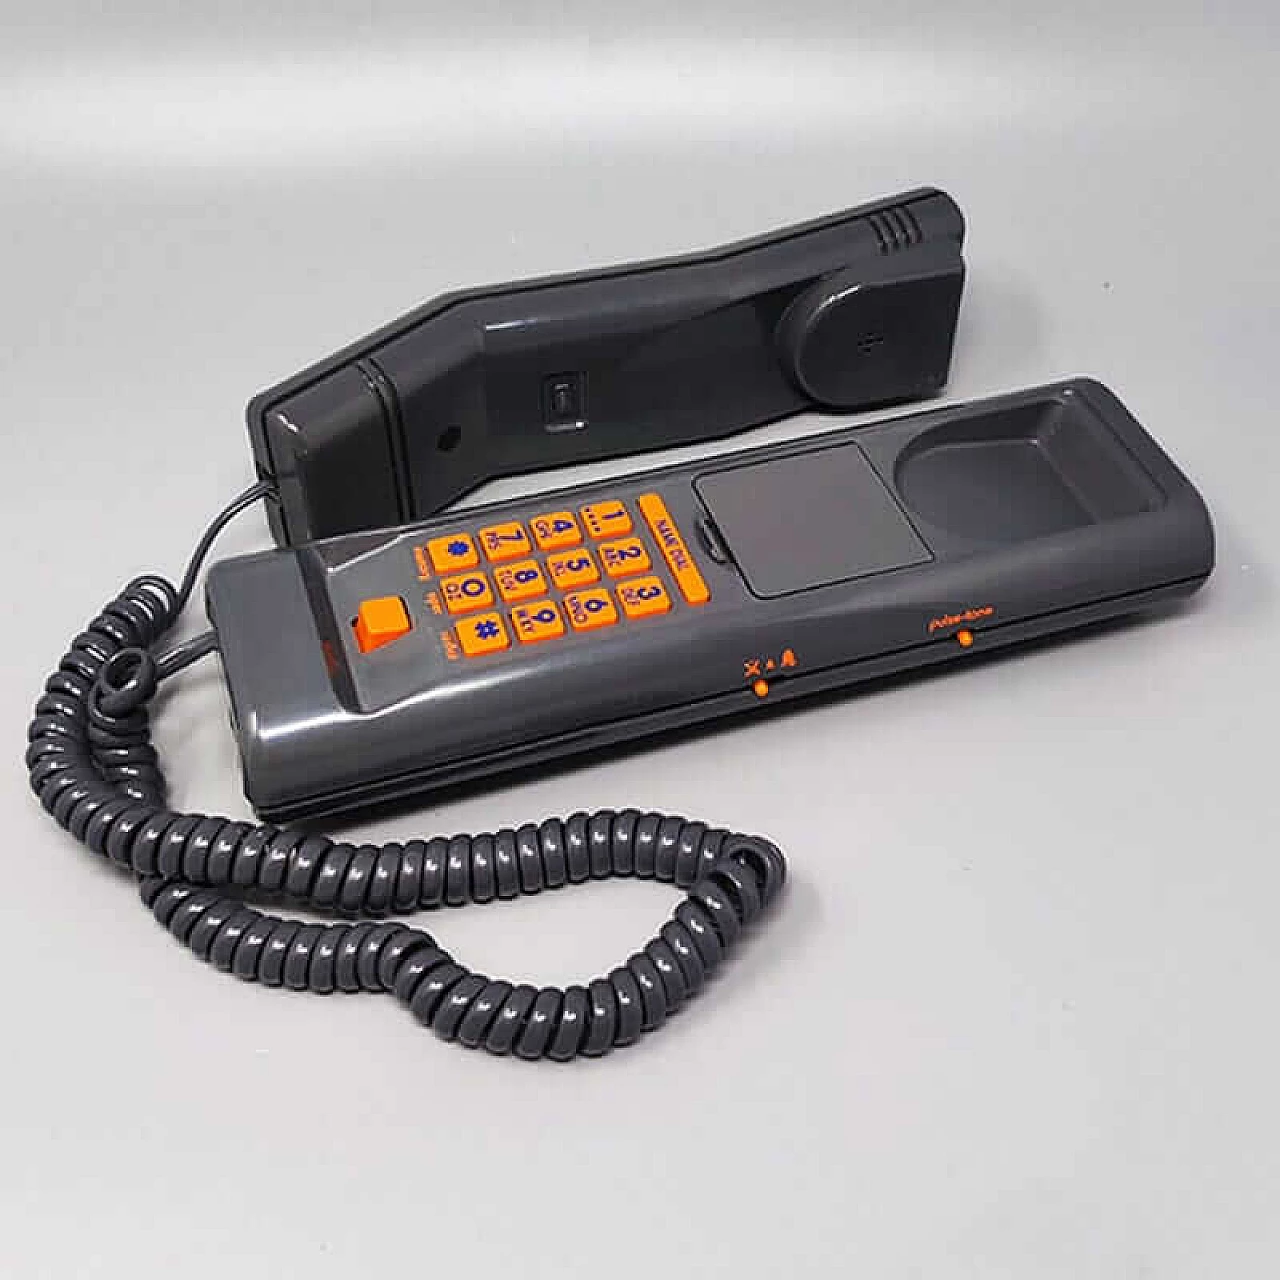 Deco Swatch Twin Phone landline phone, 1980s 7